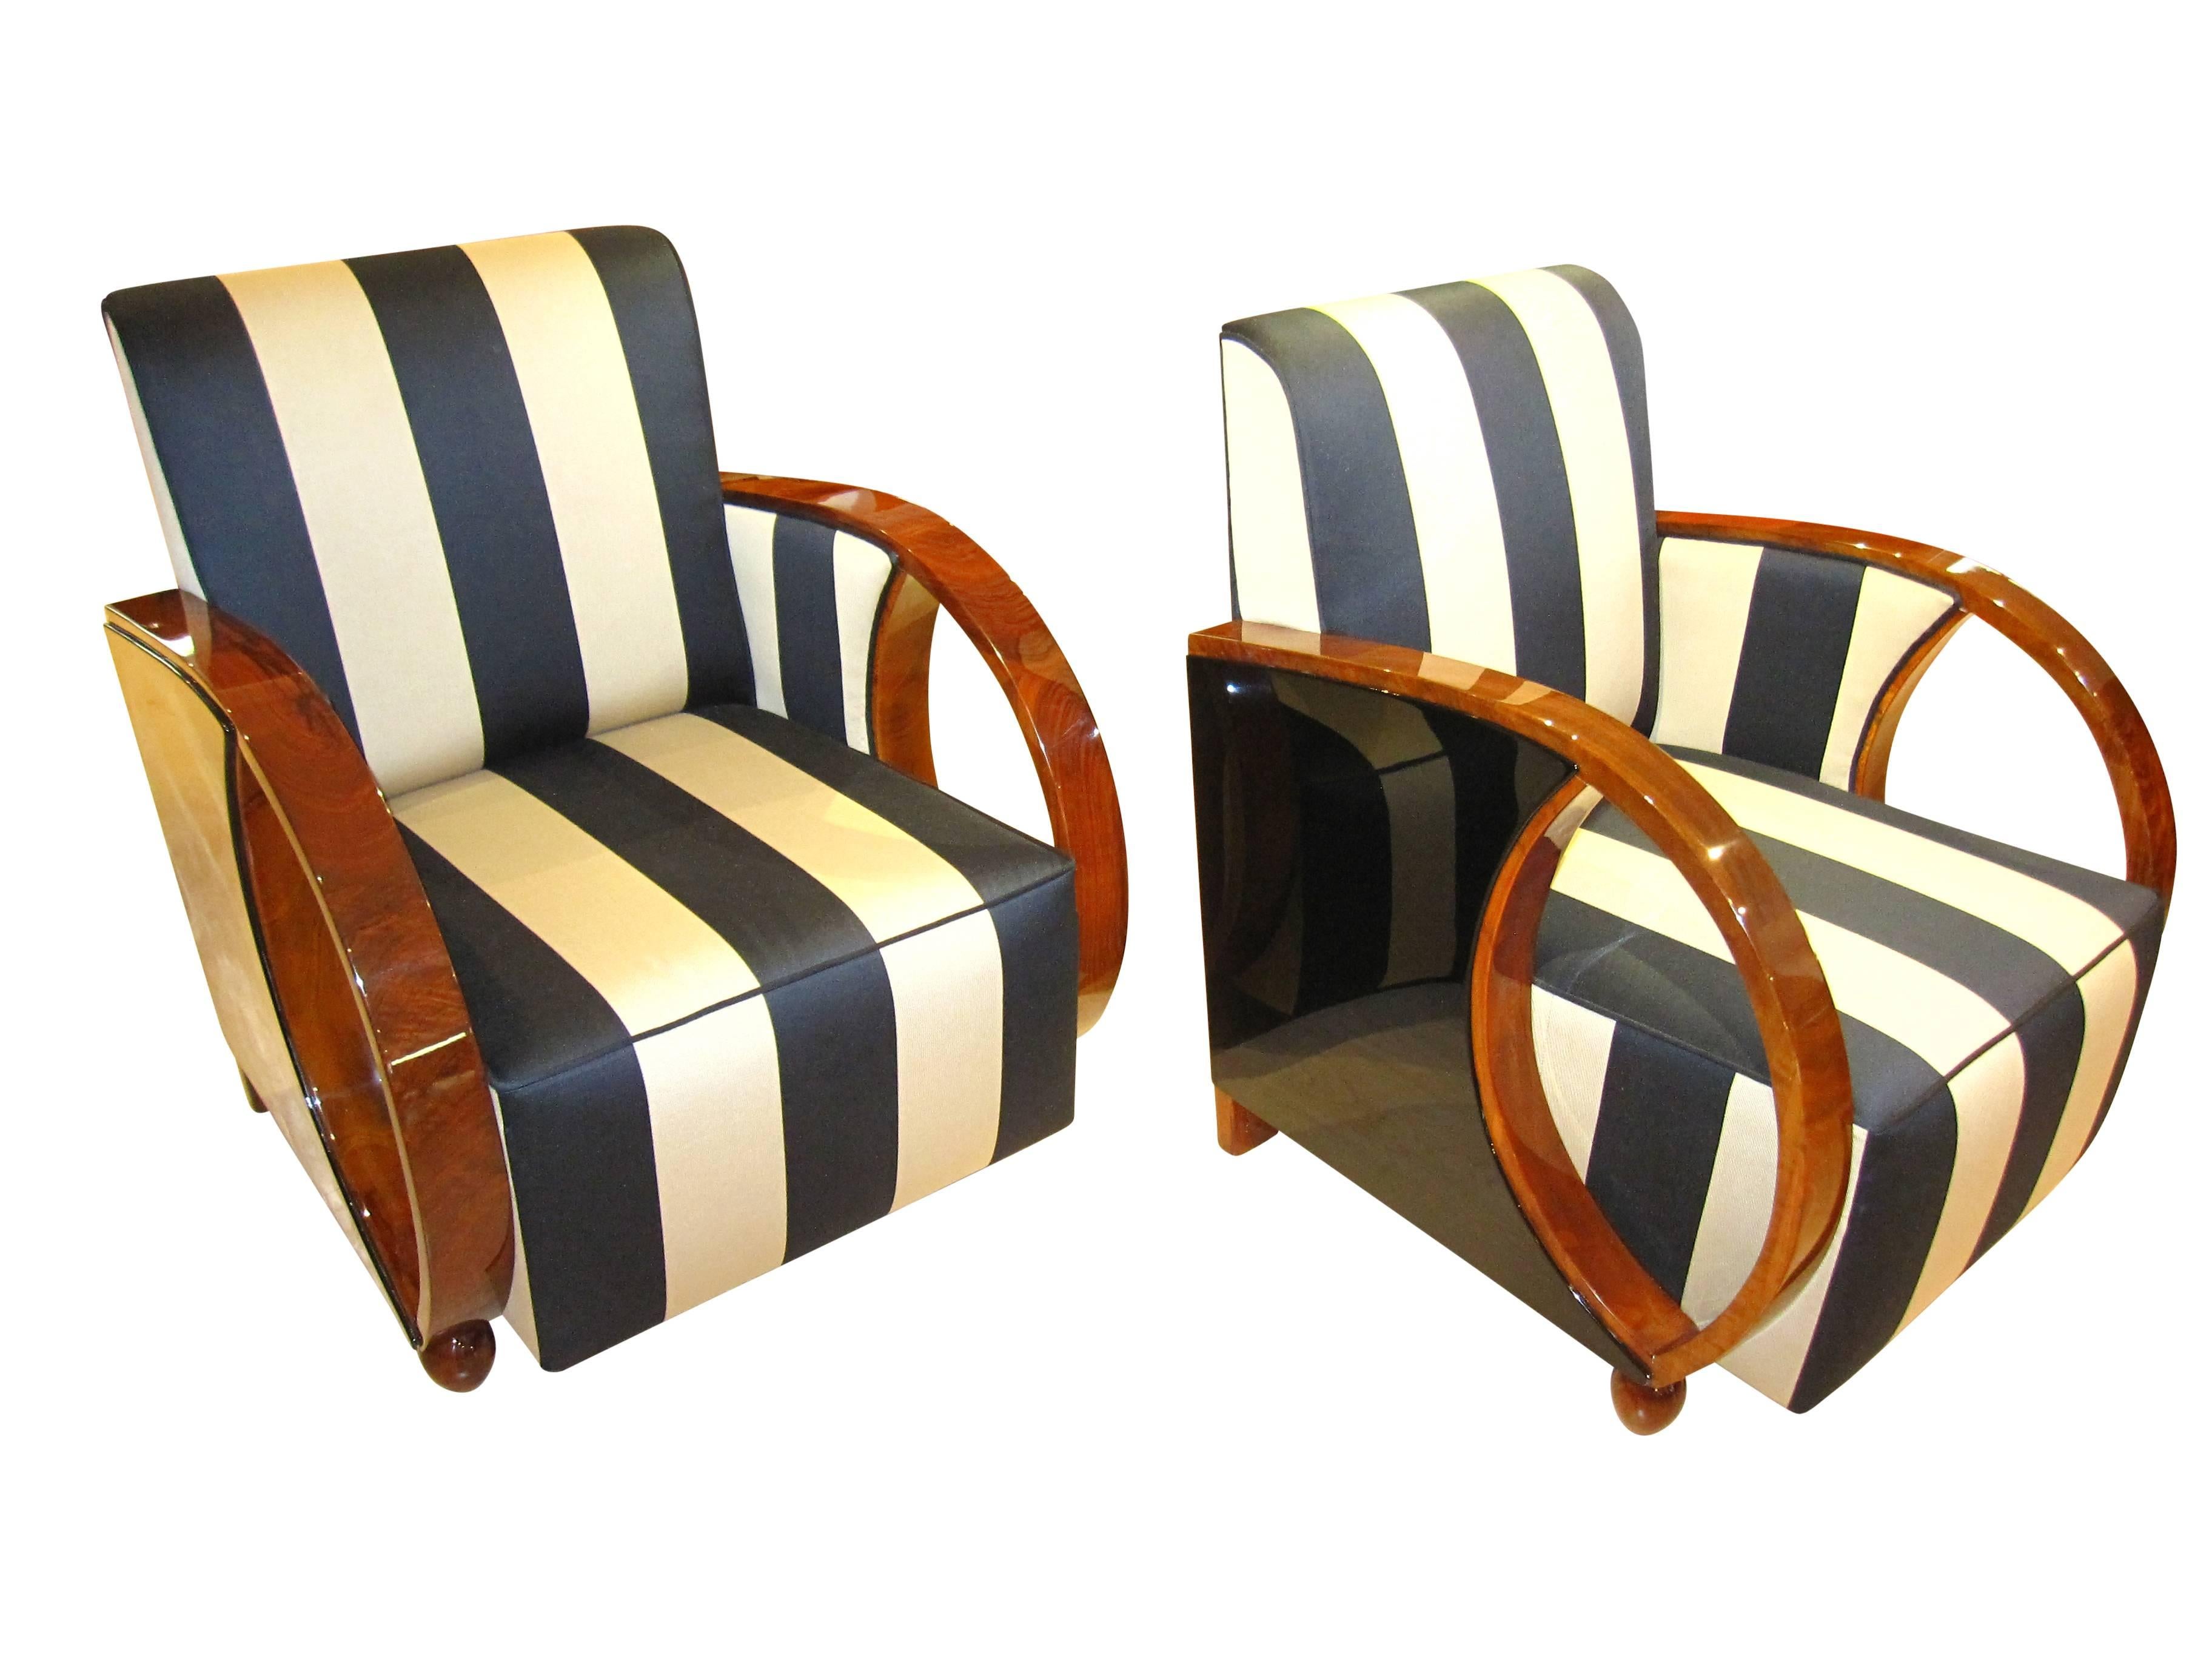 Blackened Pair of Art Deco Club Chairs, Walnut and Ebonized, France circa 1930